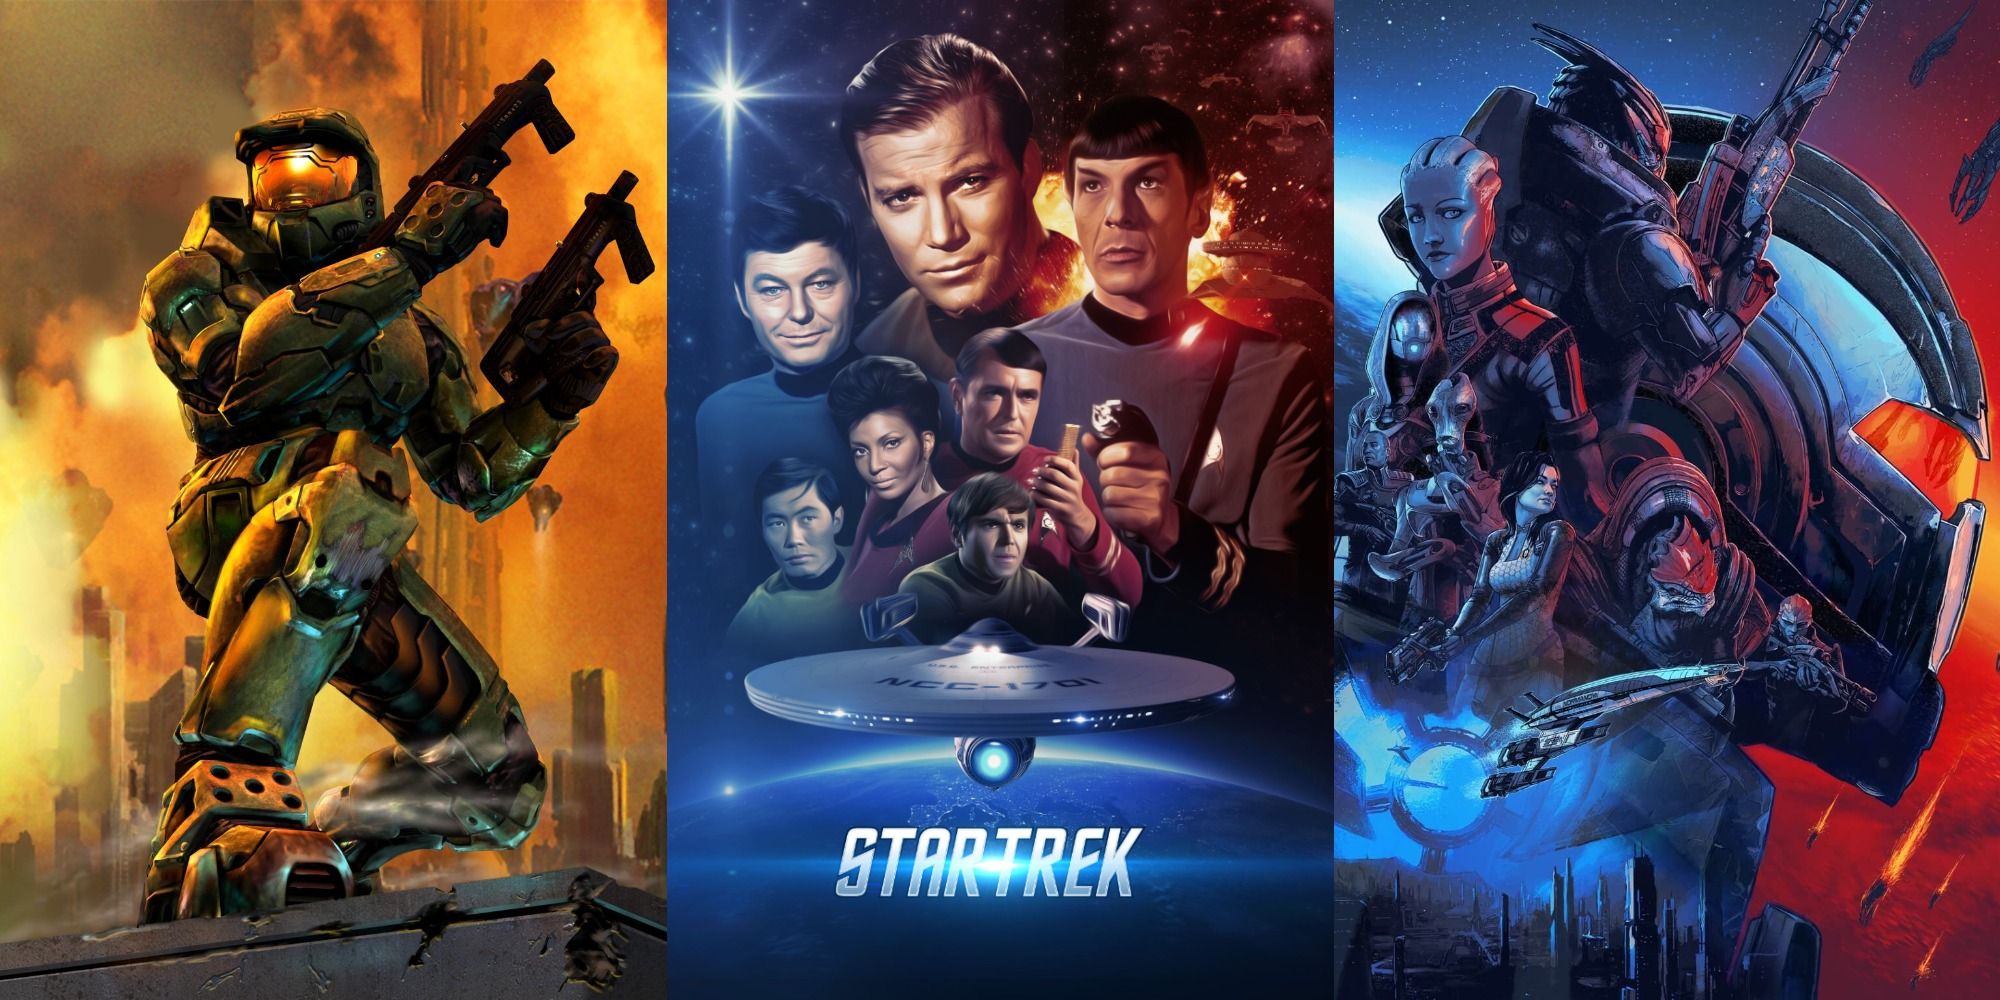 Poster art for Halo 2, Star Trek, and Mass Effect.